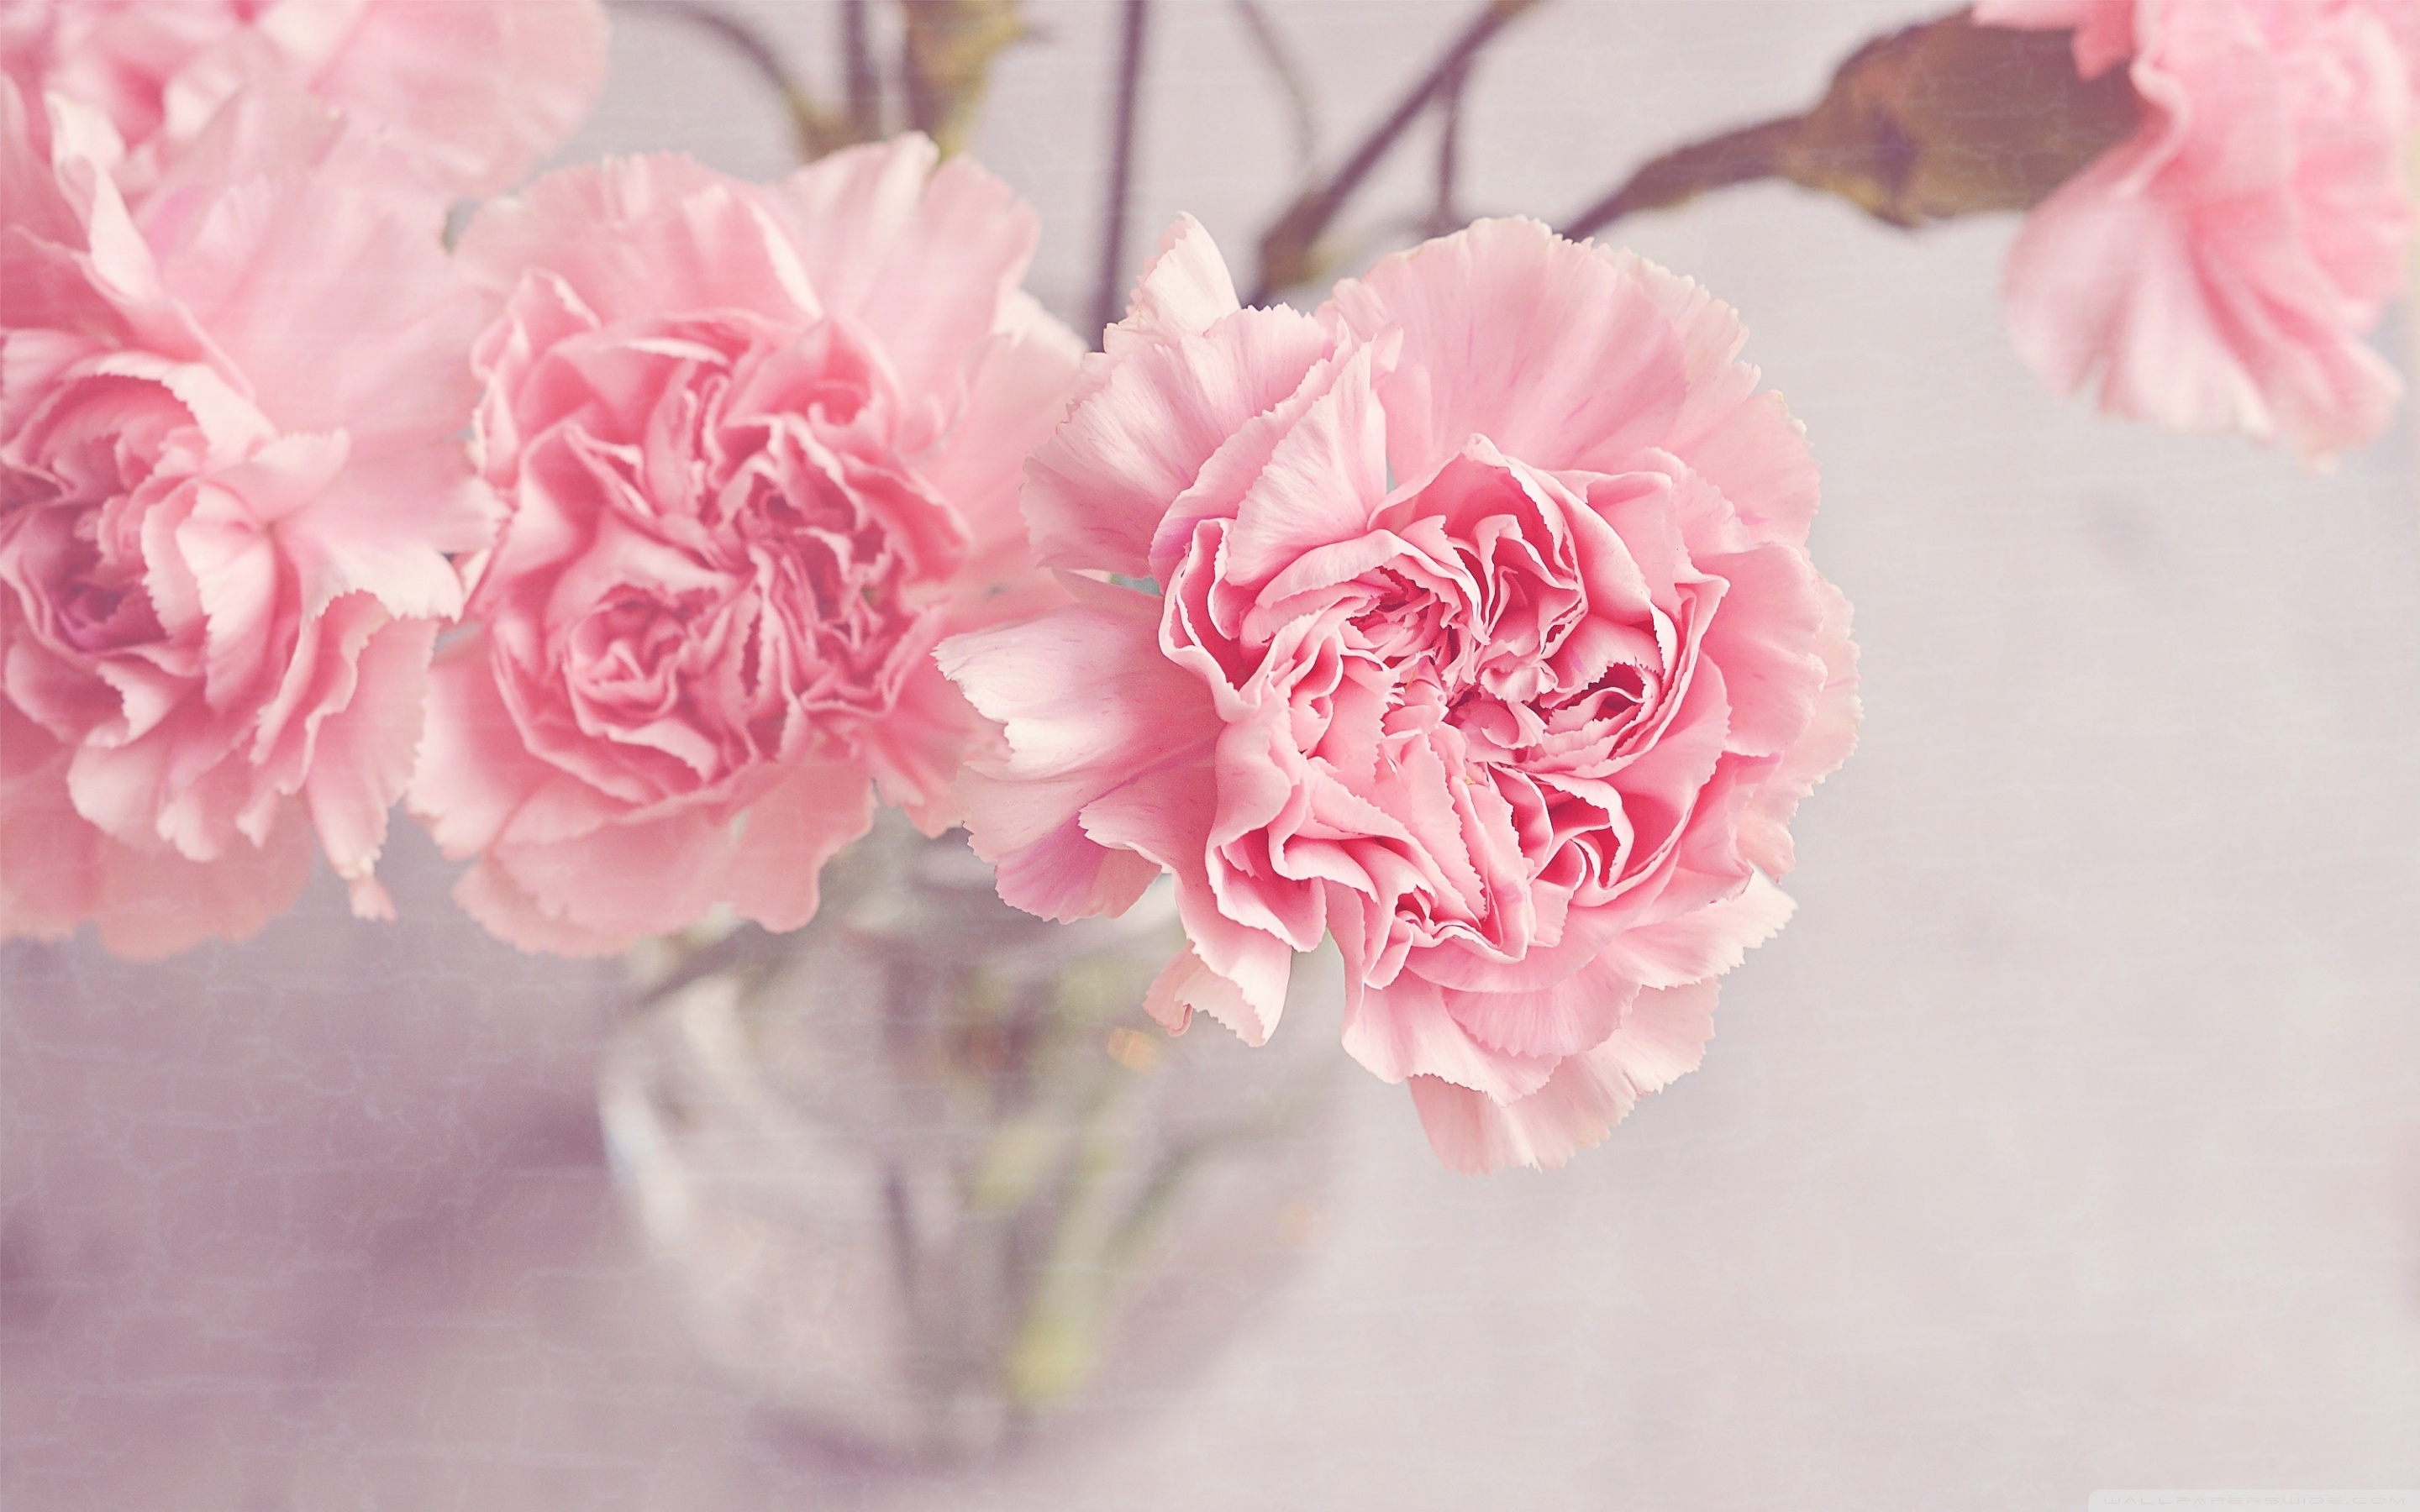 Light Pink Carnations Flowers In A Vase Ultra HD Desktop